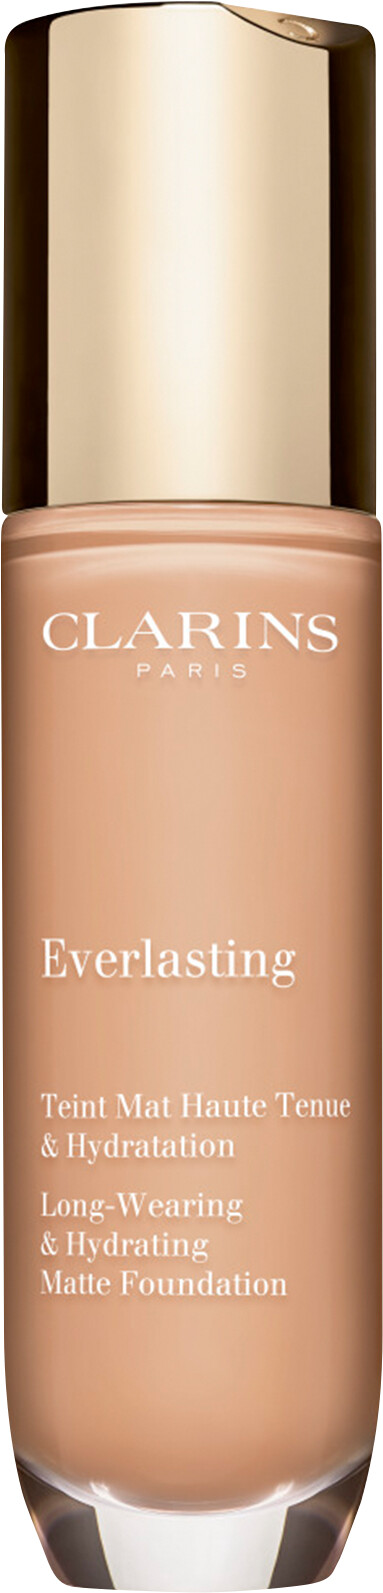 Clarins Everlasting Long-Wearing & Hydrating Matte Foundation 30ml 107C - Beige